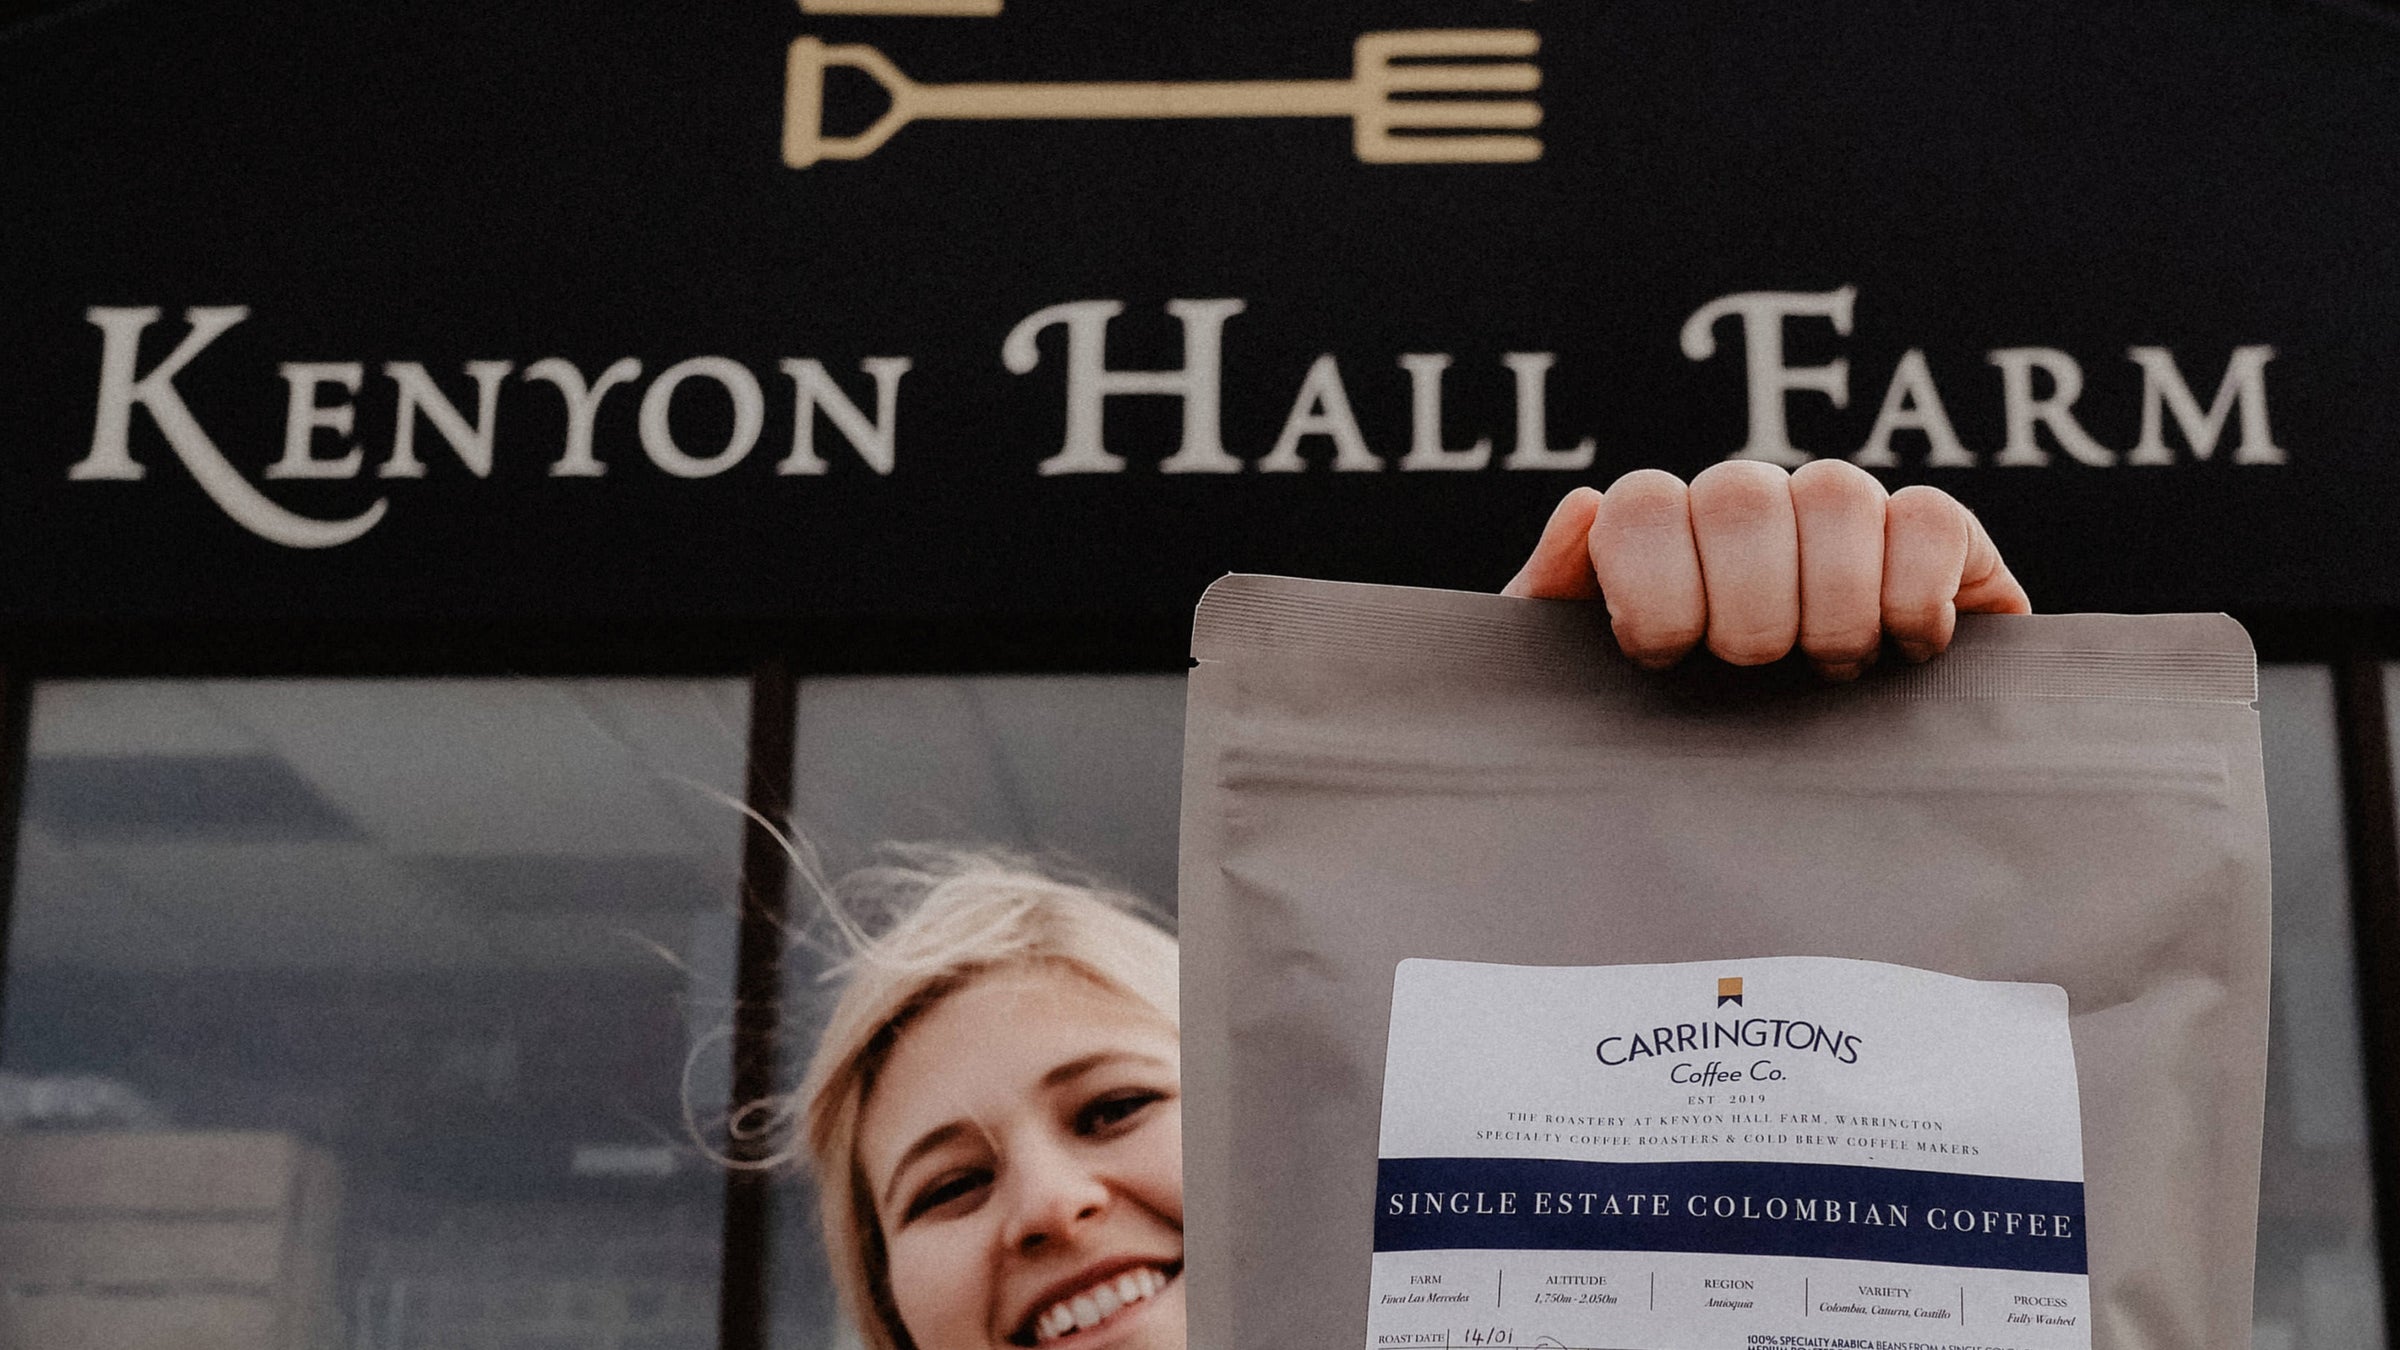 Carringtons Coffee Co at Kenyon Hall Farm, Warrington - 2020 to 2021